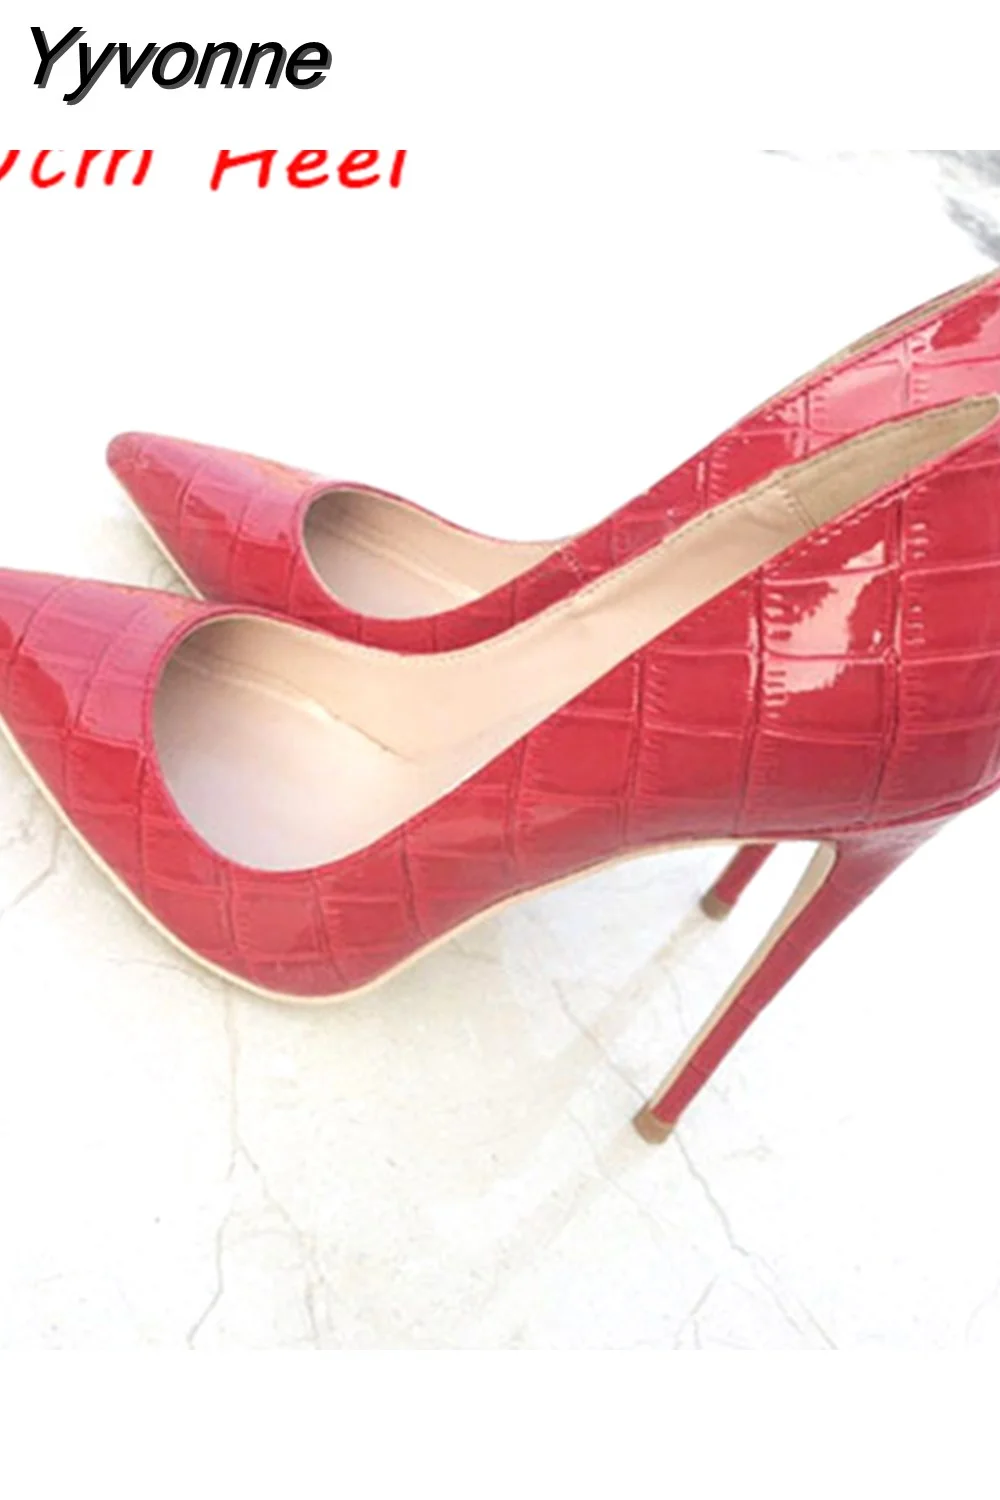 Yyvonne Women 12cm High Heels Fashion Girl Pumps High Heeled Pointed Toes Wedding Party Shoes High Heels Thin heels QP054 ROVICIYA